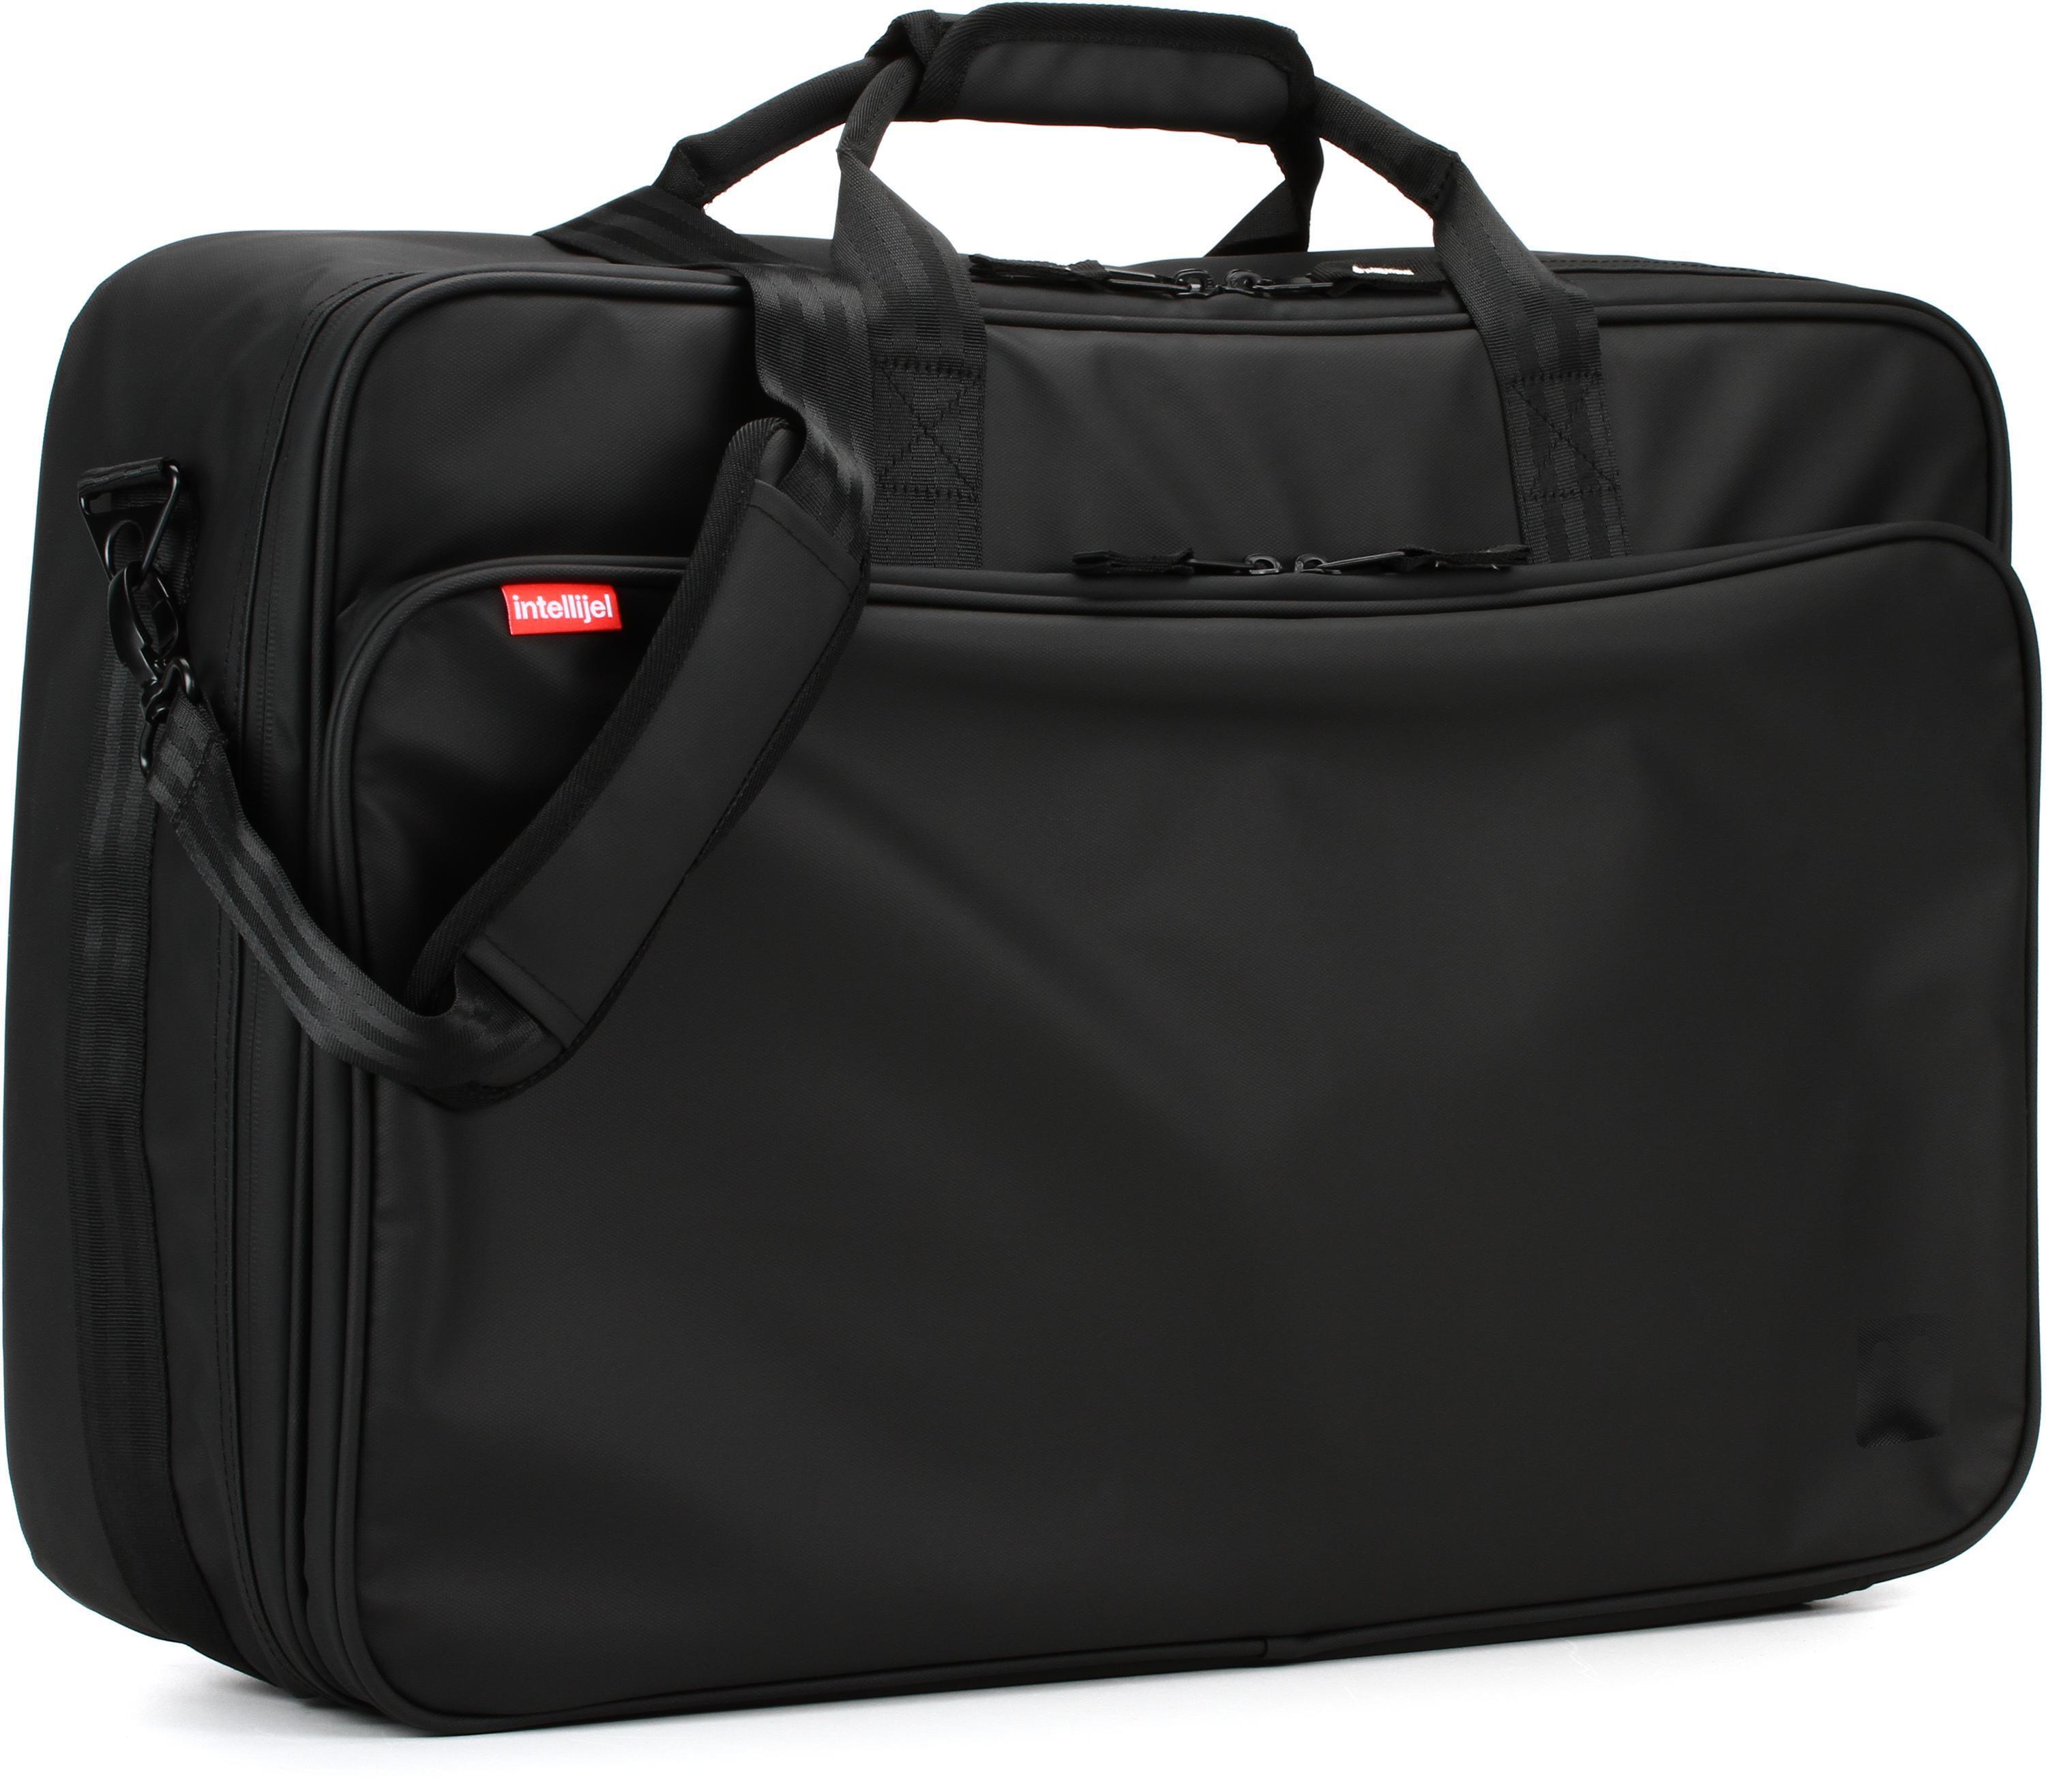 Intellijel Gig Bag for Intellijel 7U-104HP Eurorack Case | Sweetwater